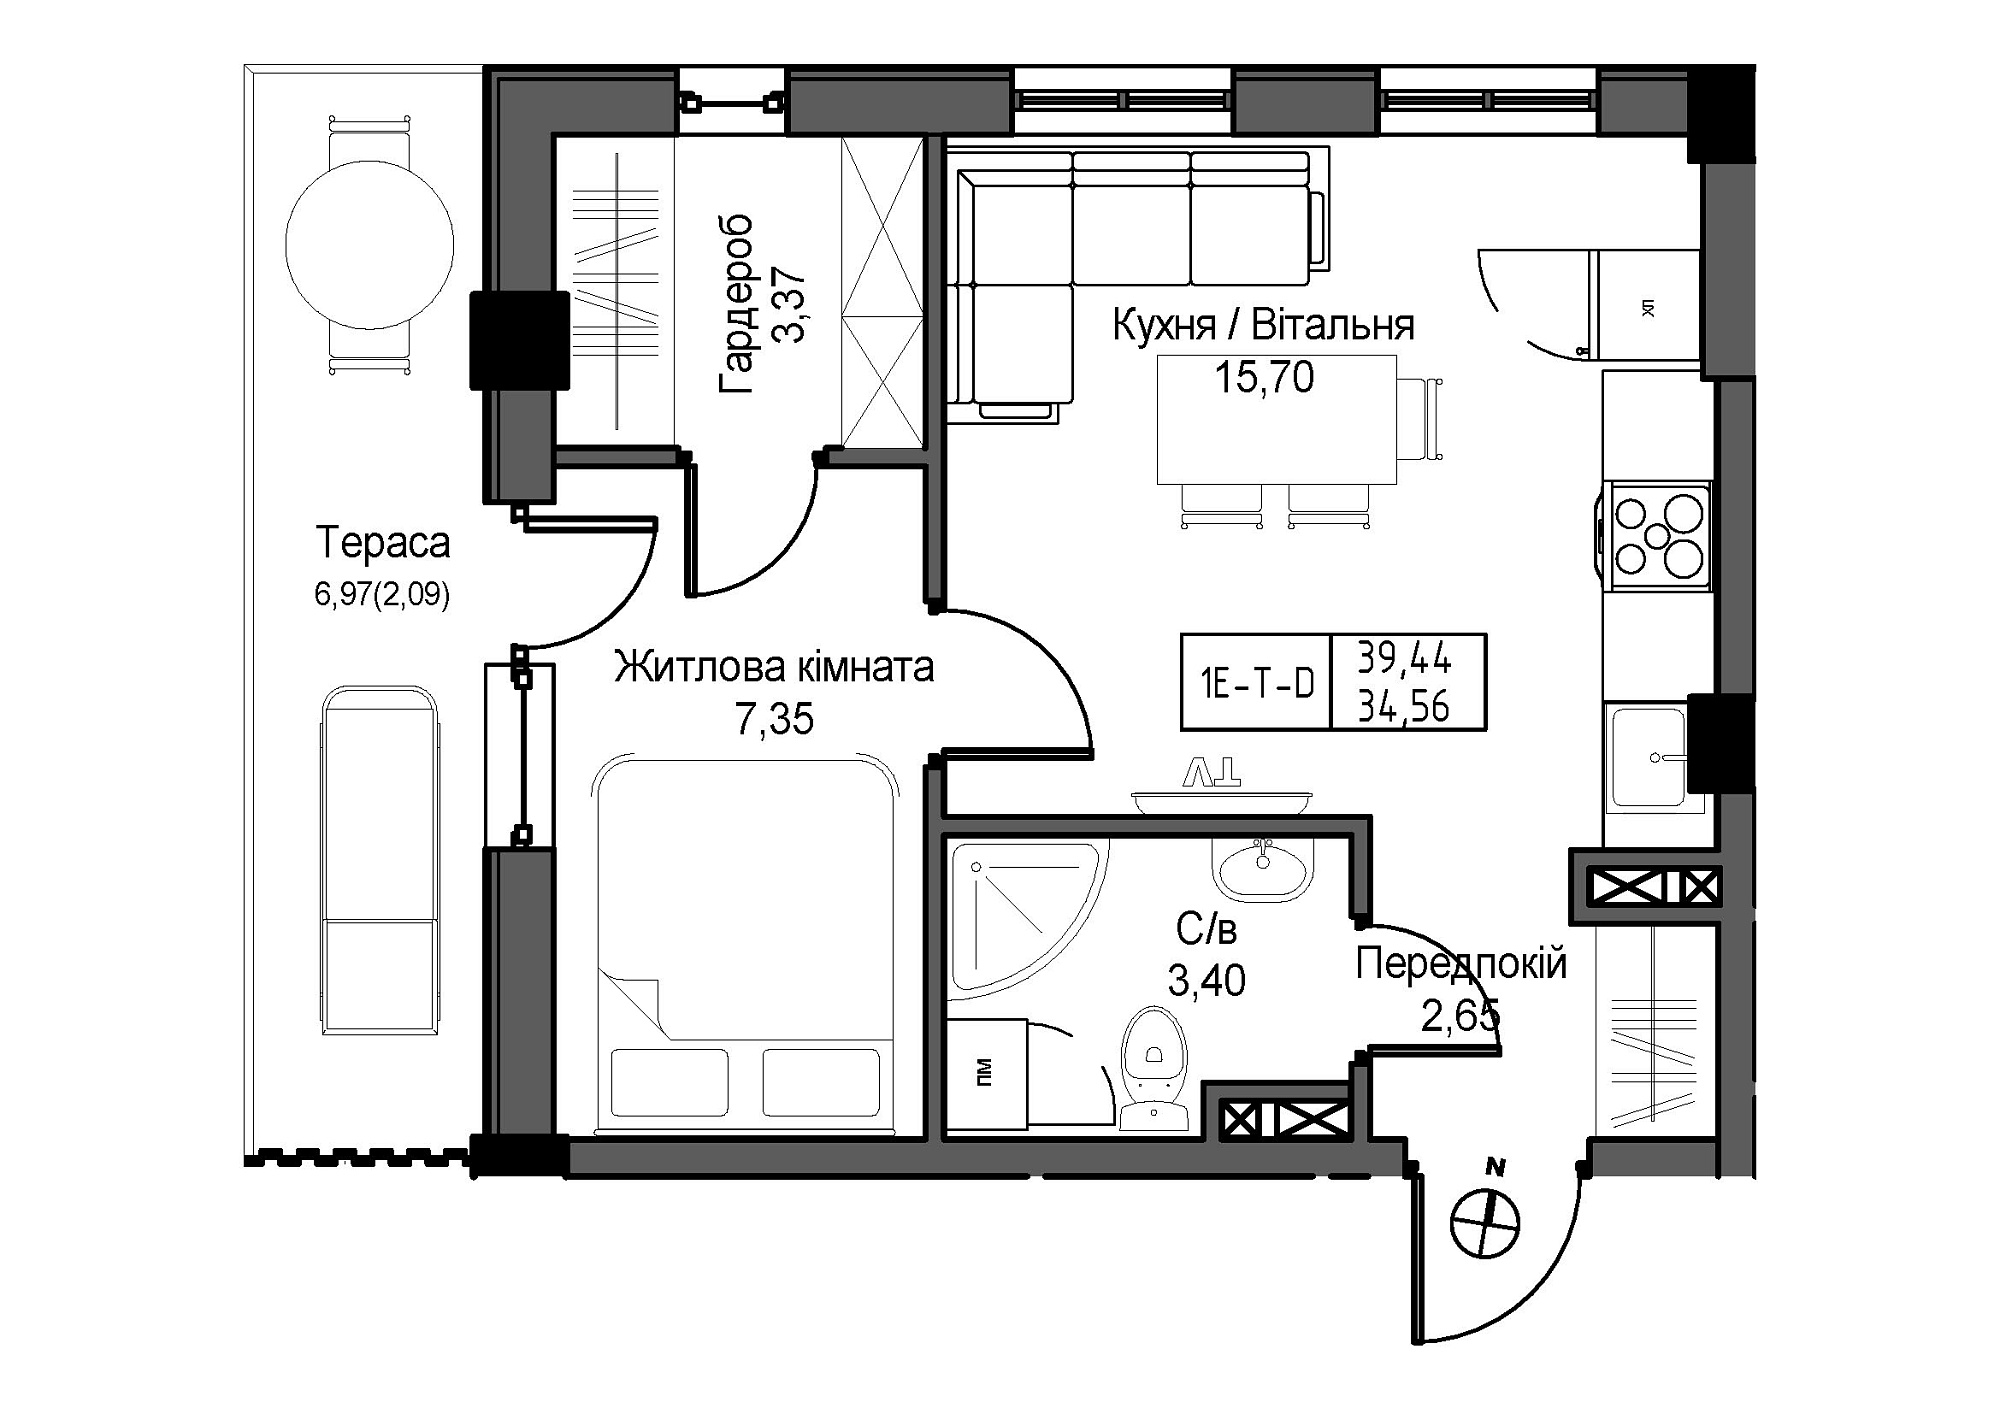 Планування 1-к квартира площею 34.56м2, UM-007-05/0002.